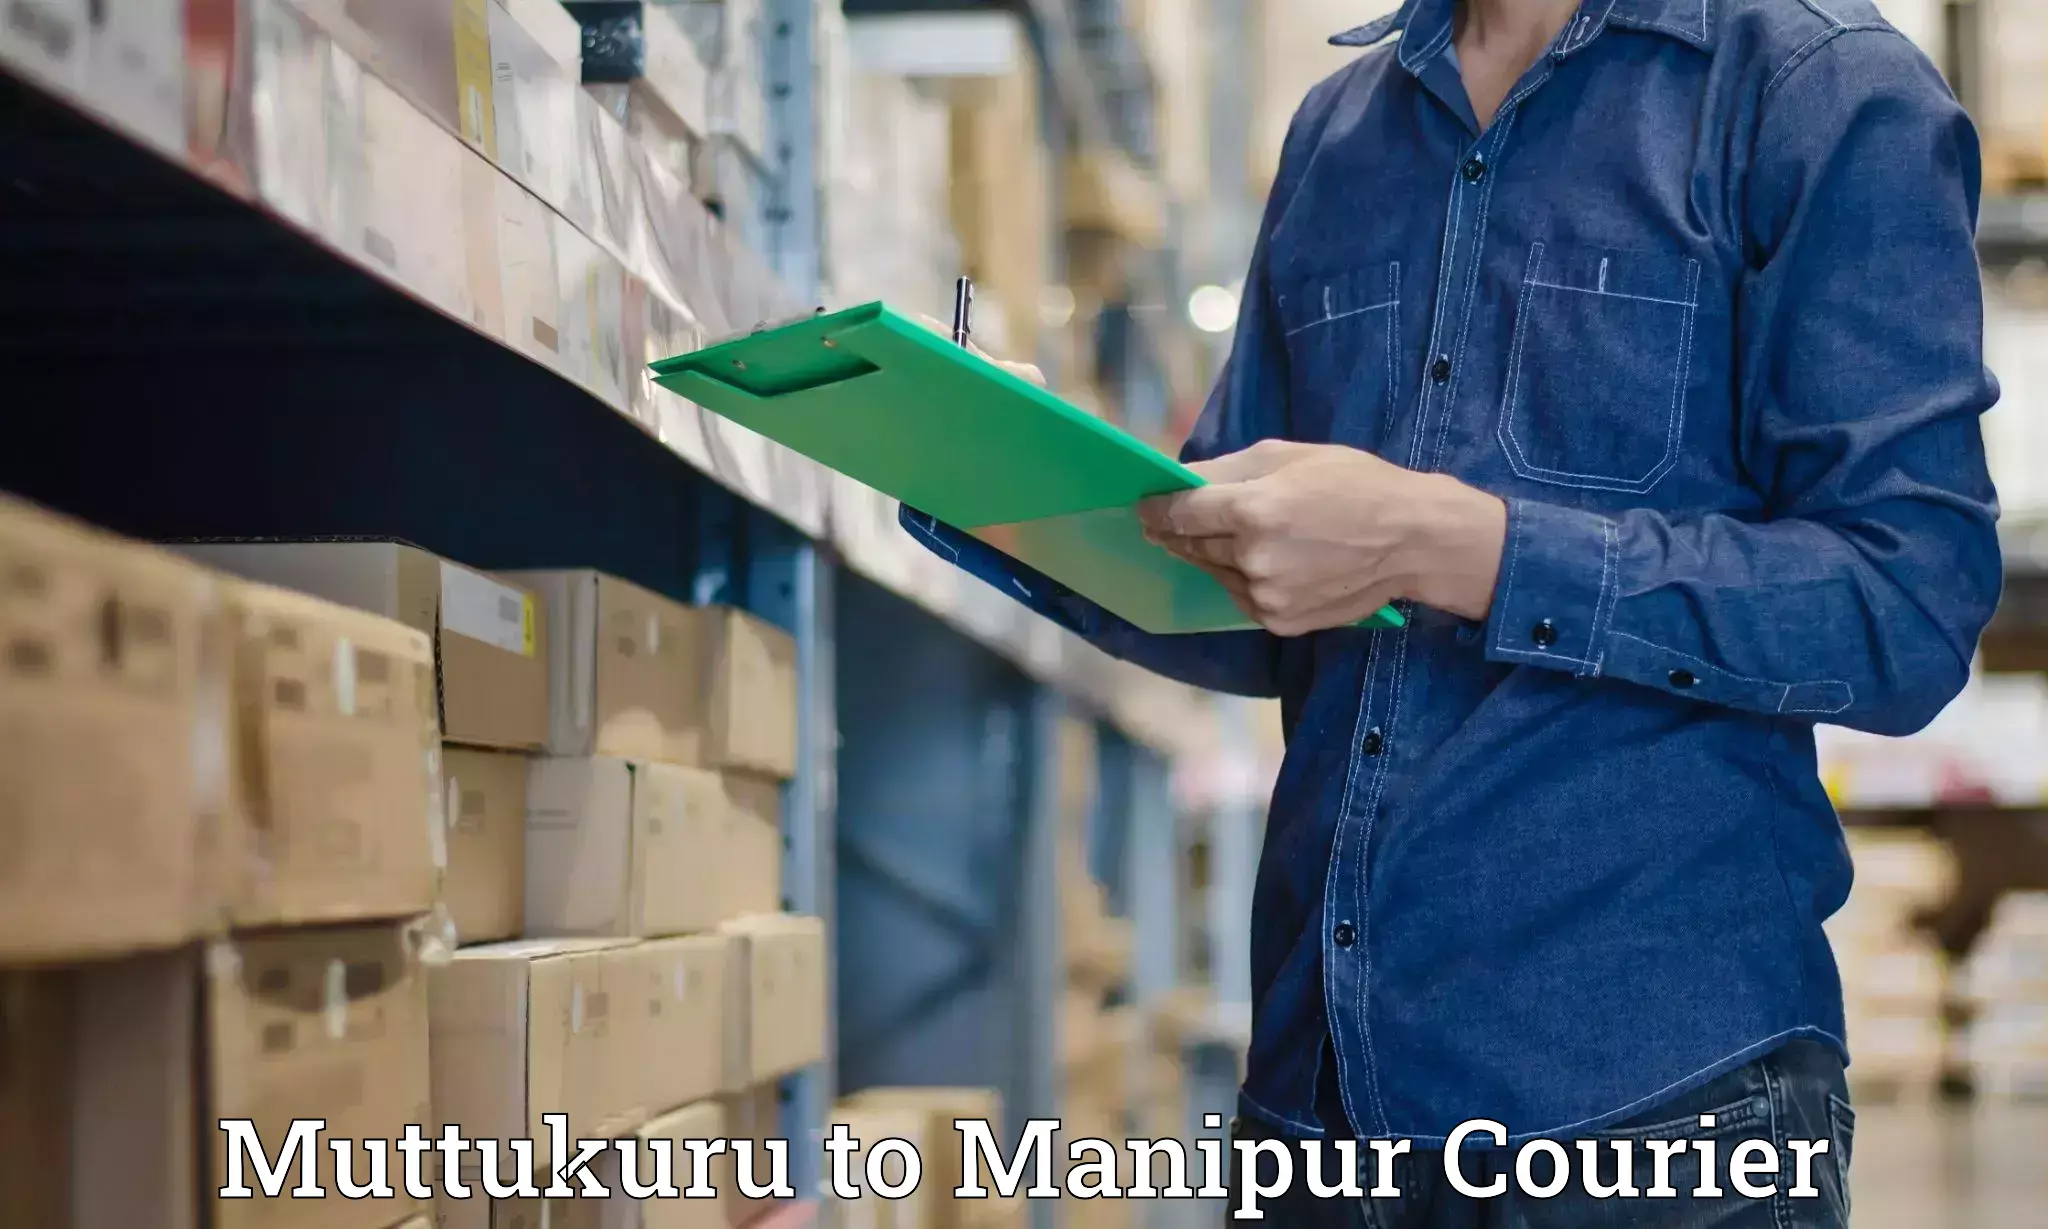 Courier service partnerships Muttukuru to Manipur